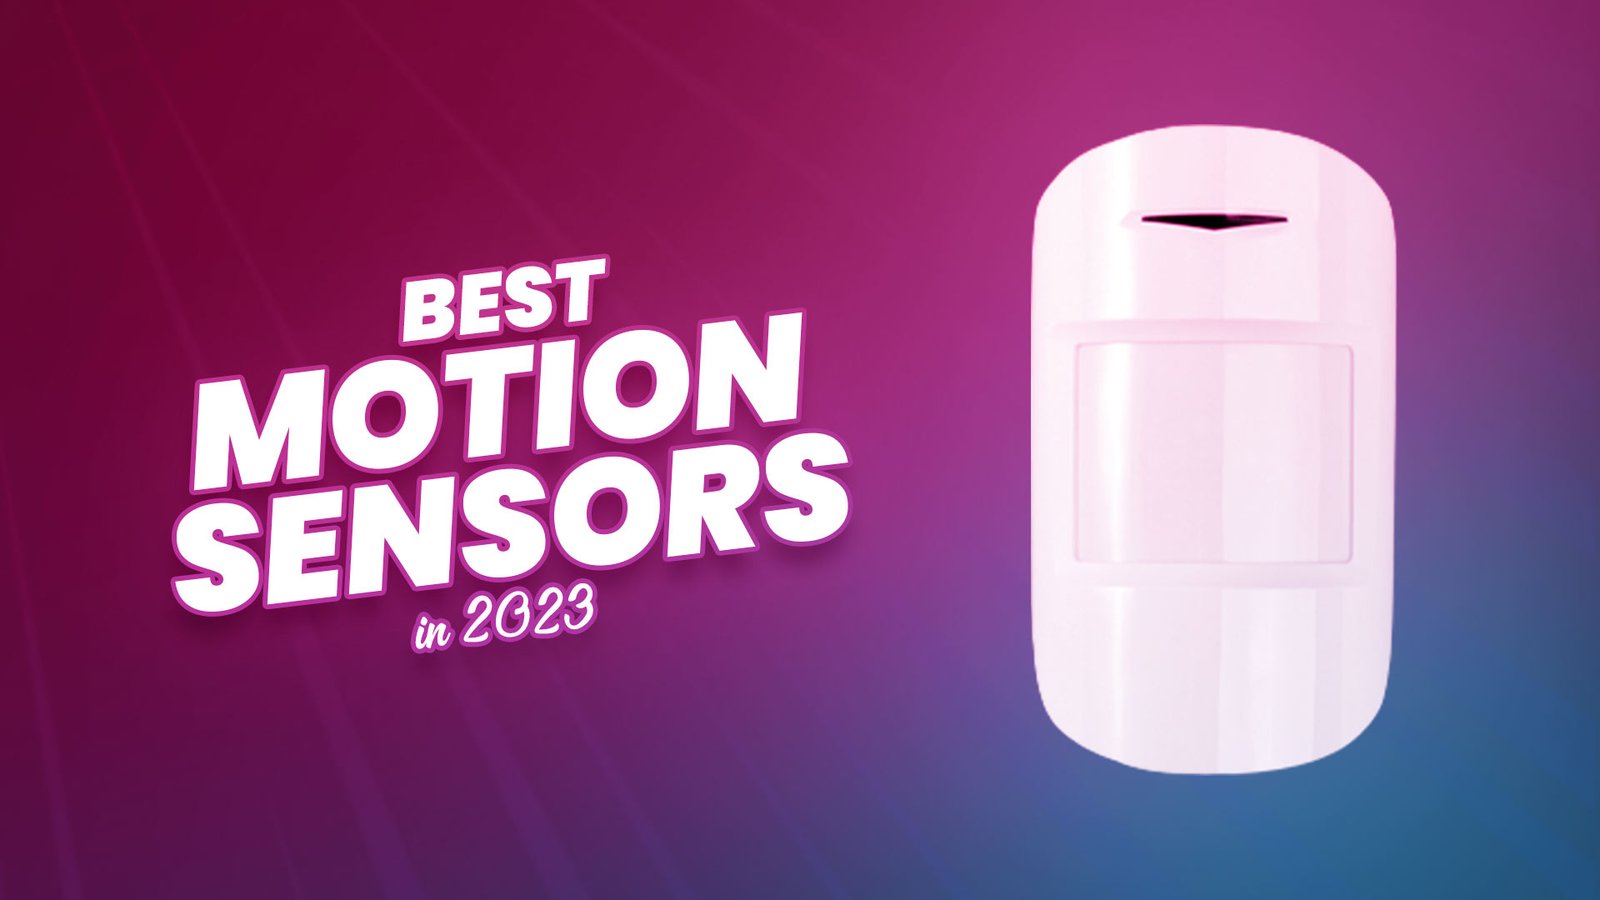 Best Motion Sensors in 2023